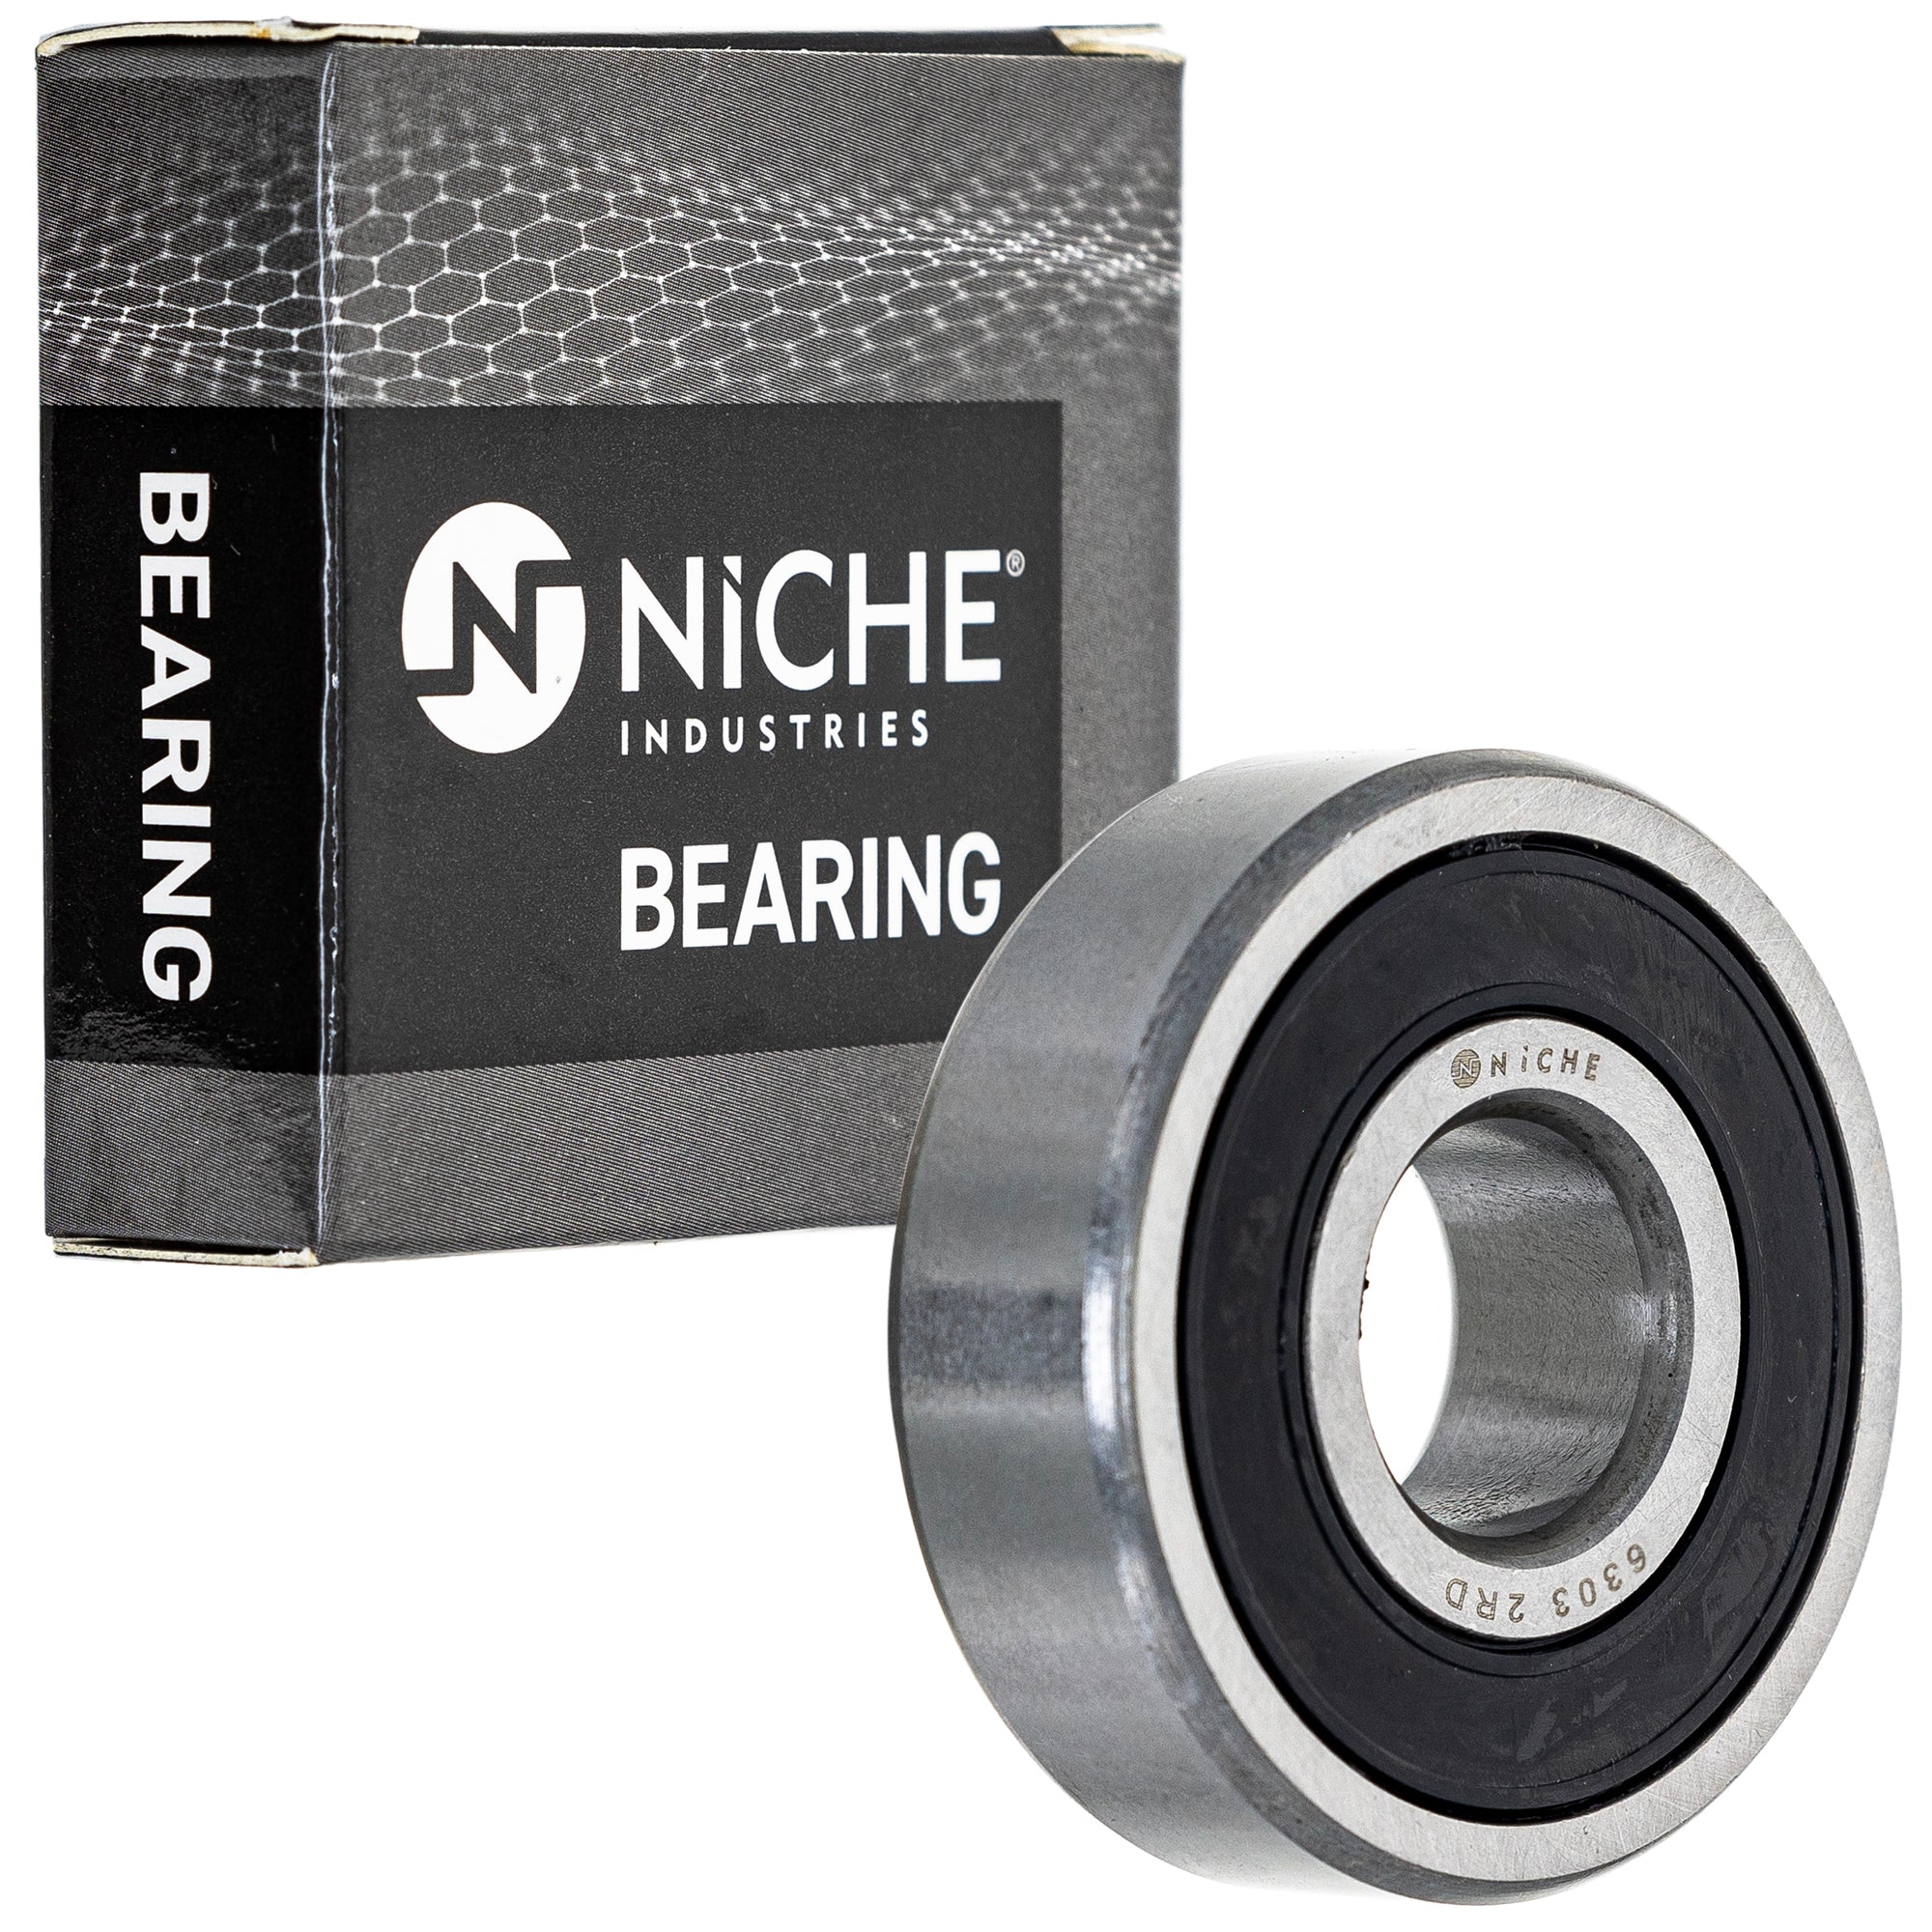 NICHE 519-CBB2214R Bearing 10-Pack for zOTHER XR650L XR400R XR250R